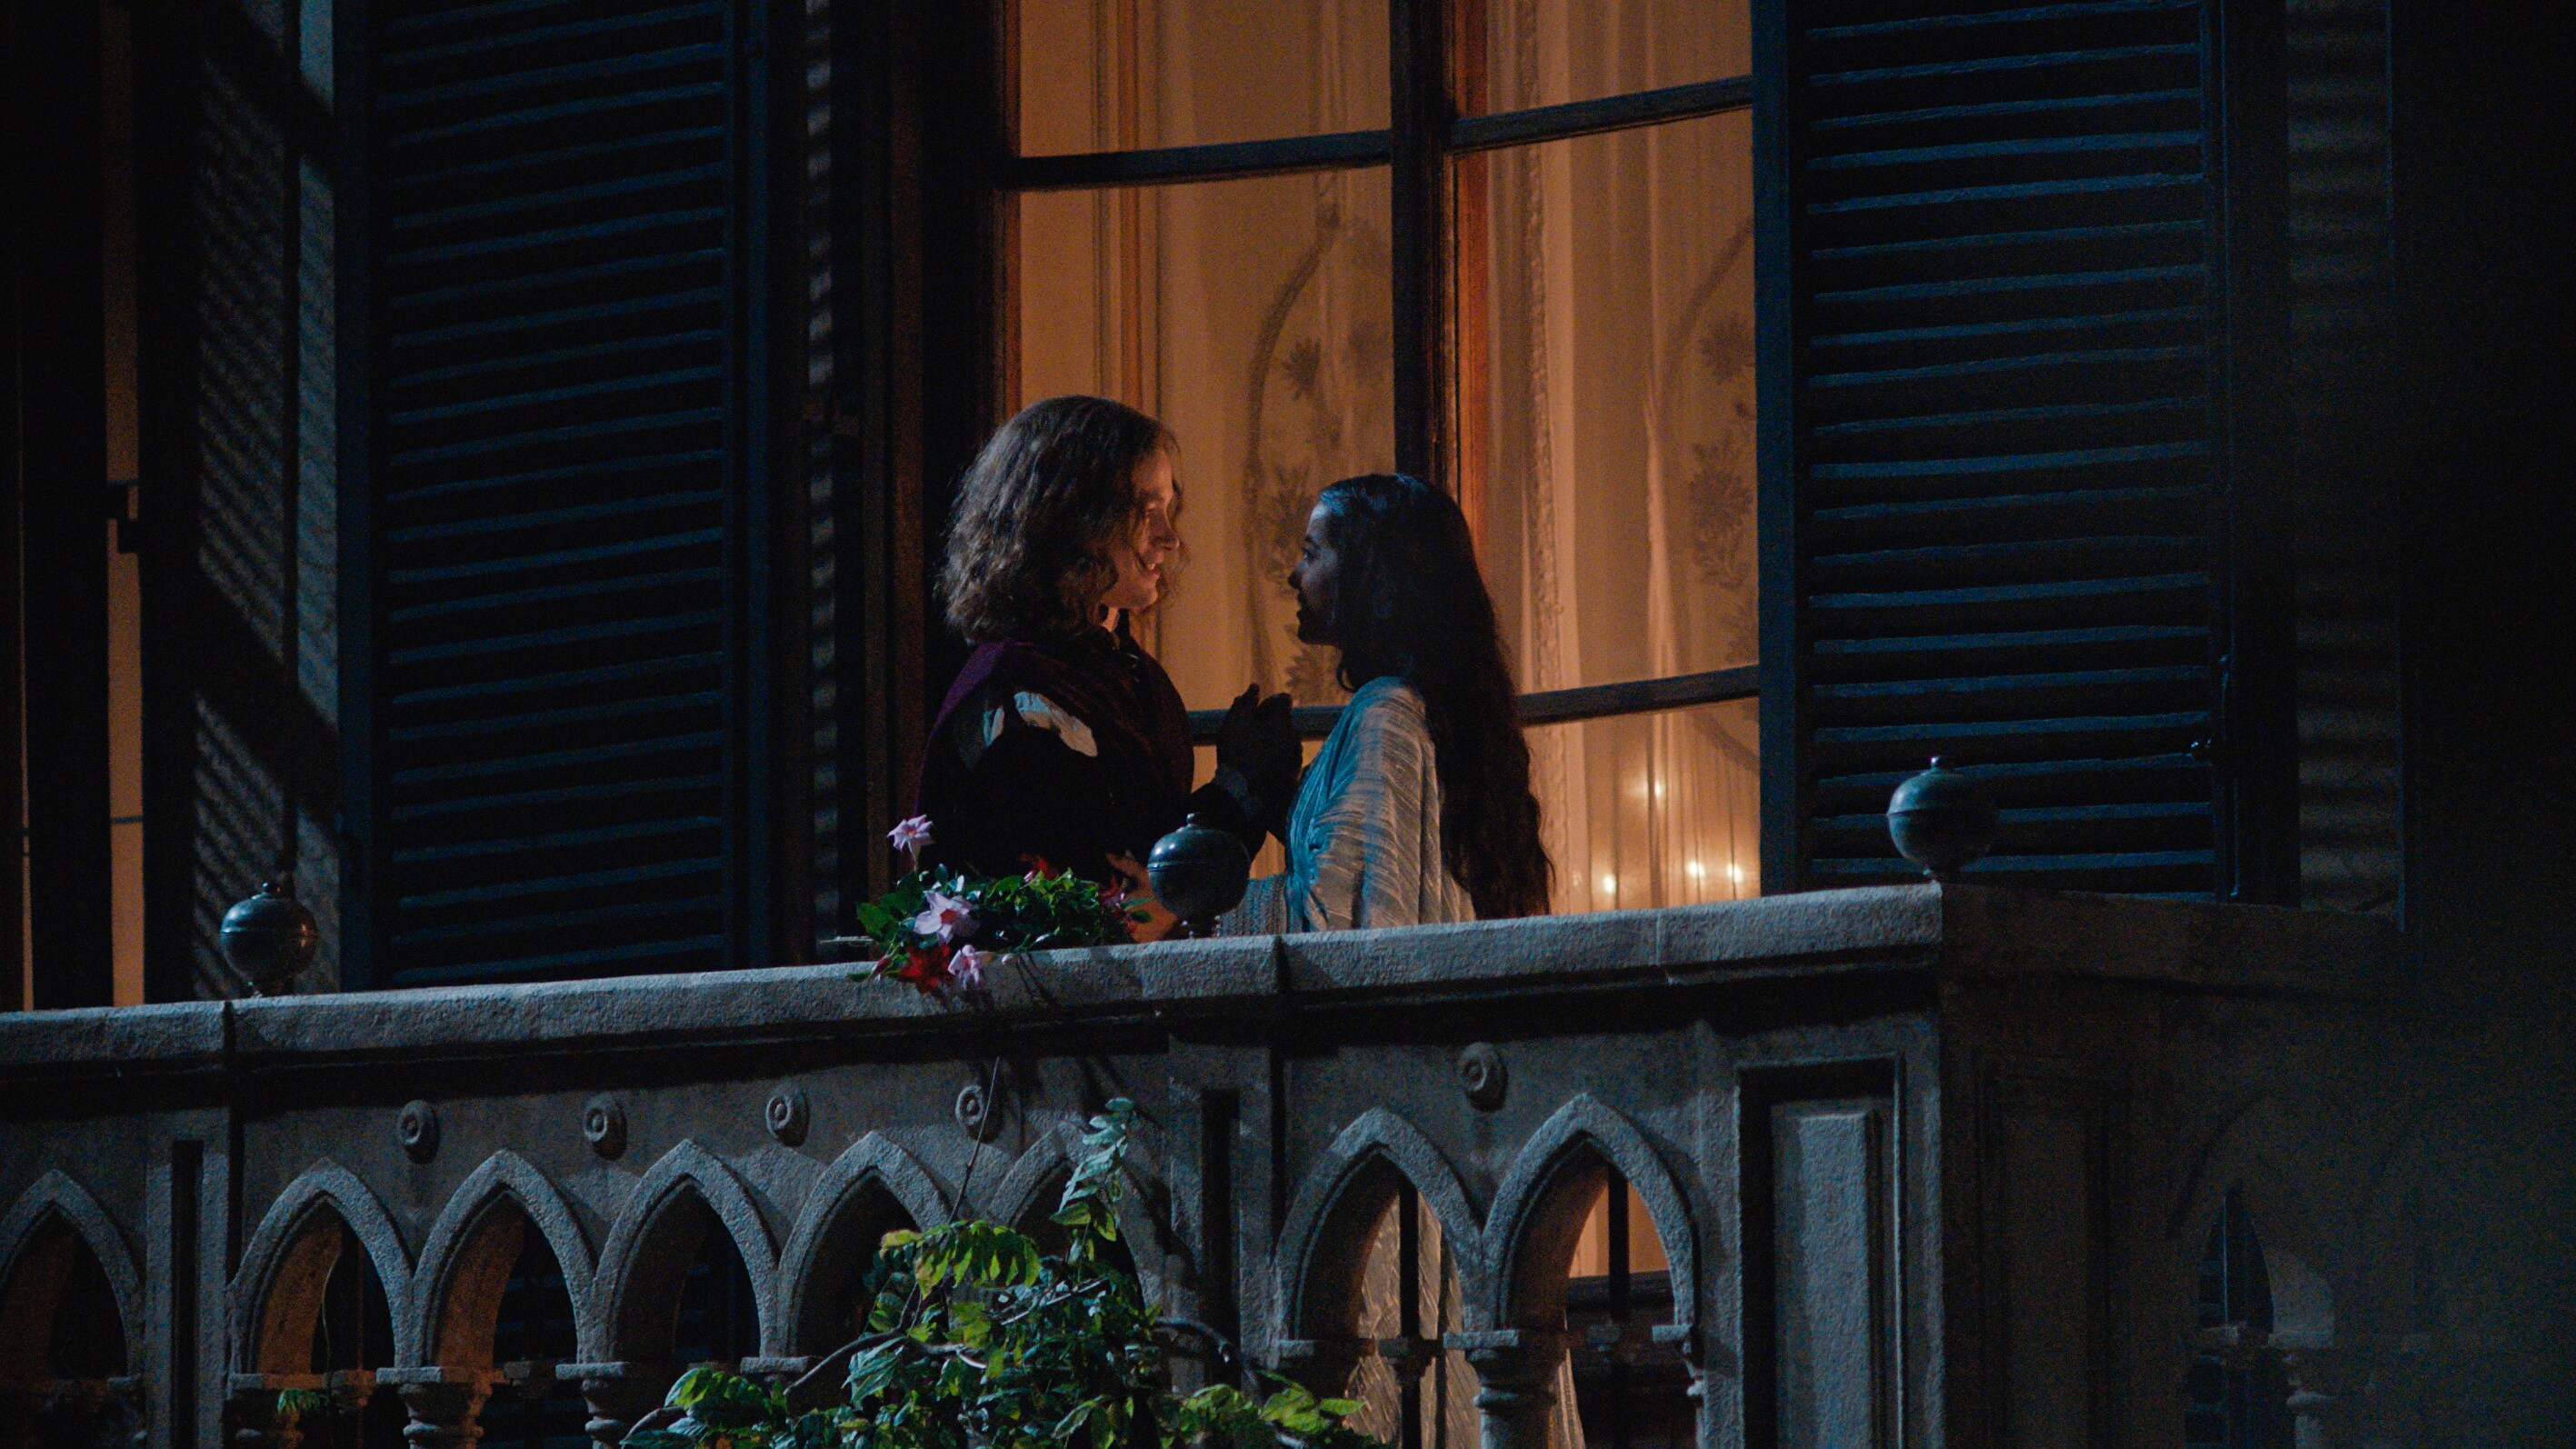 Romeo and Juliet on balcony.